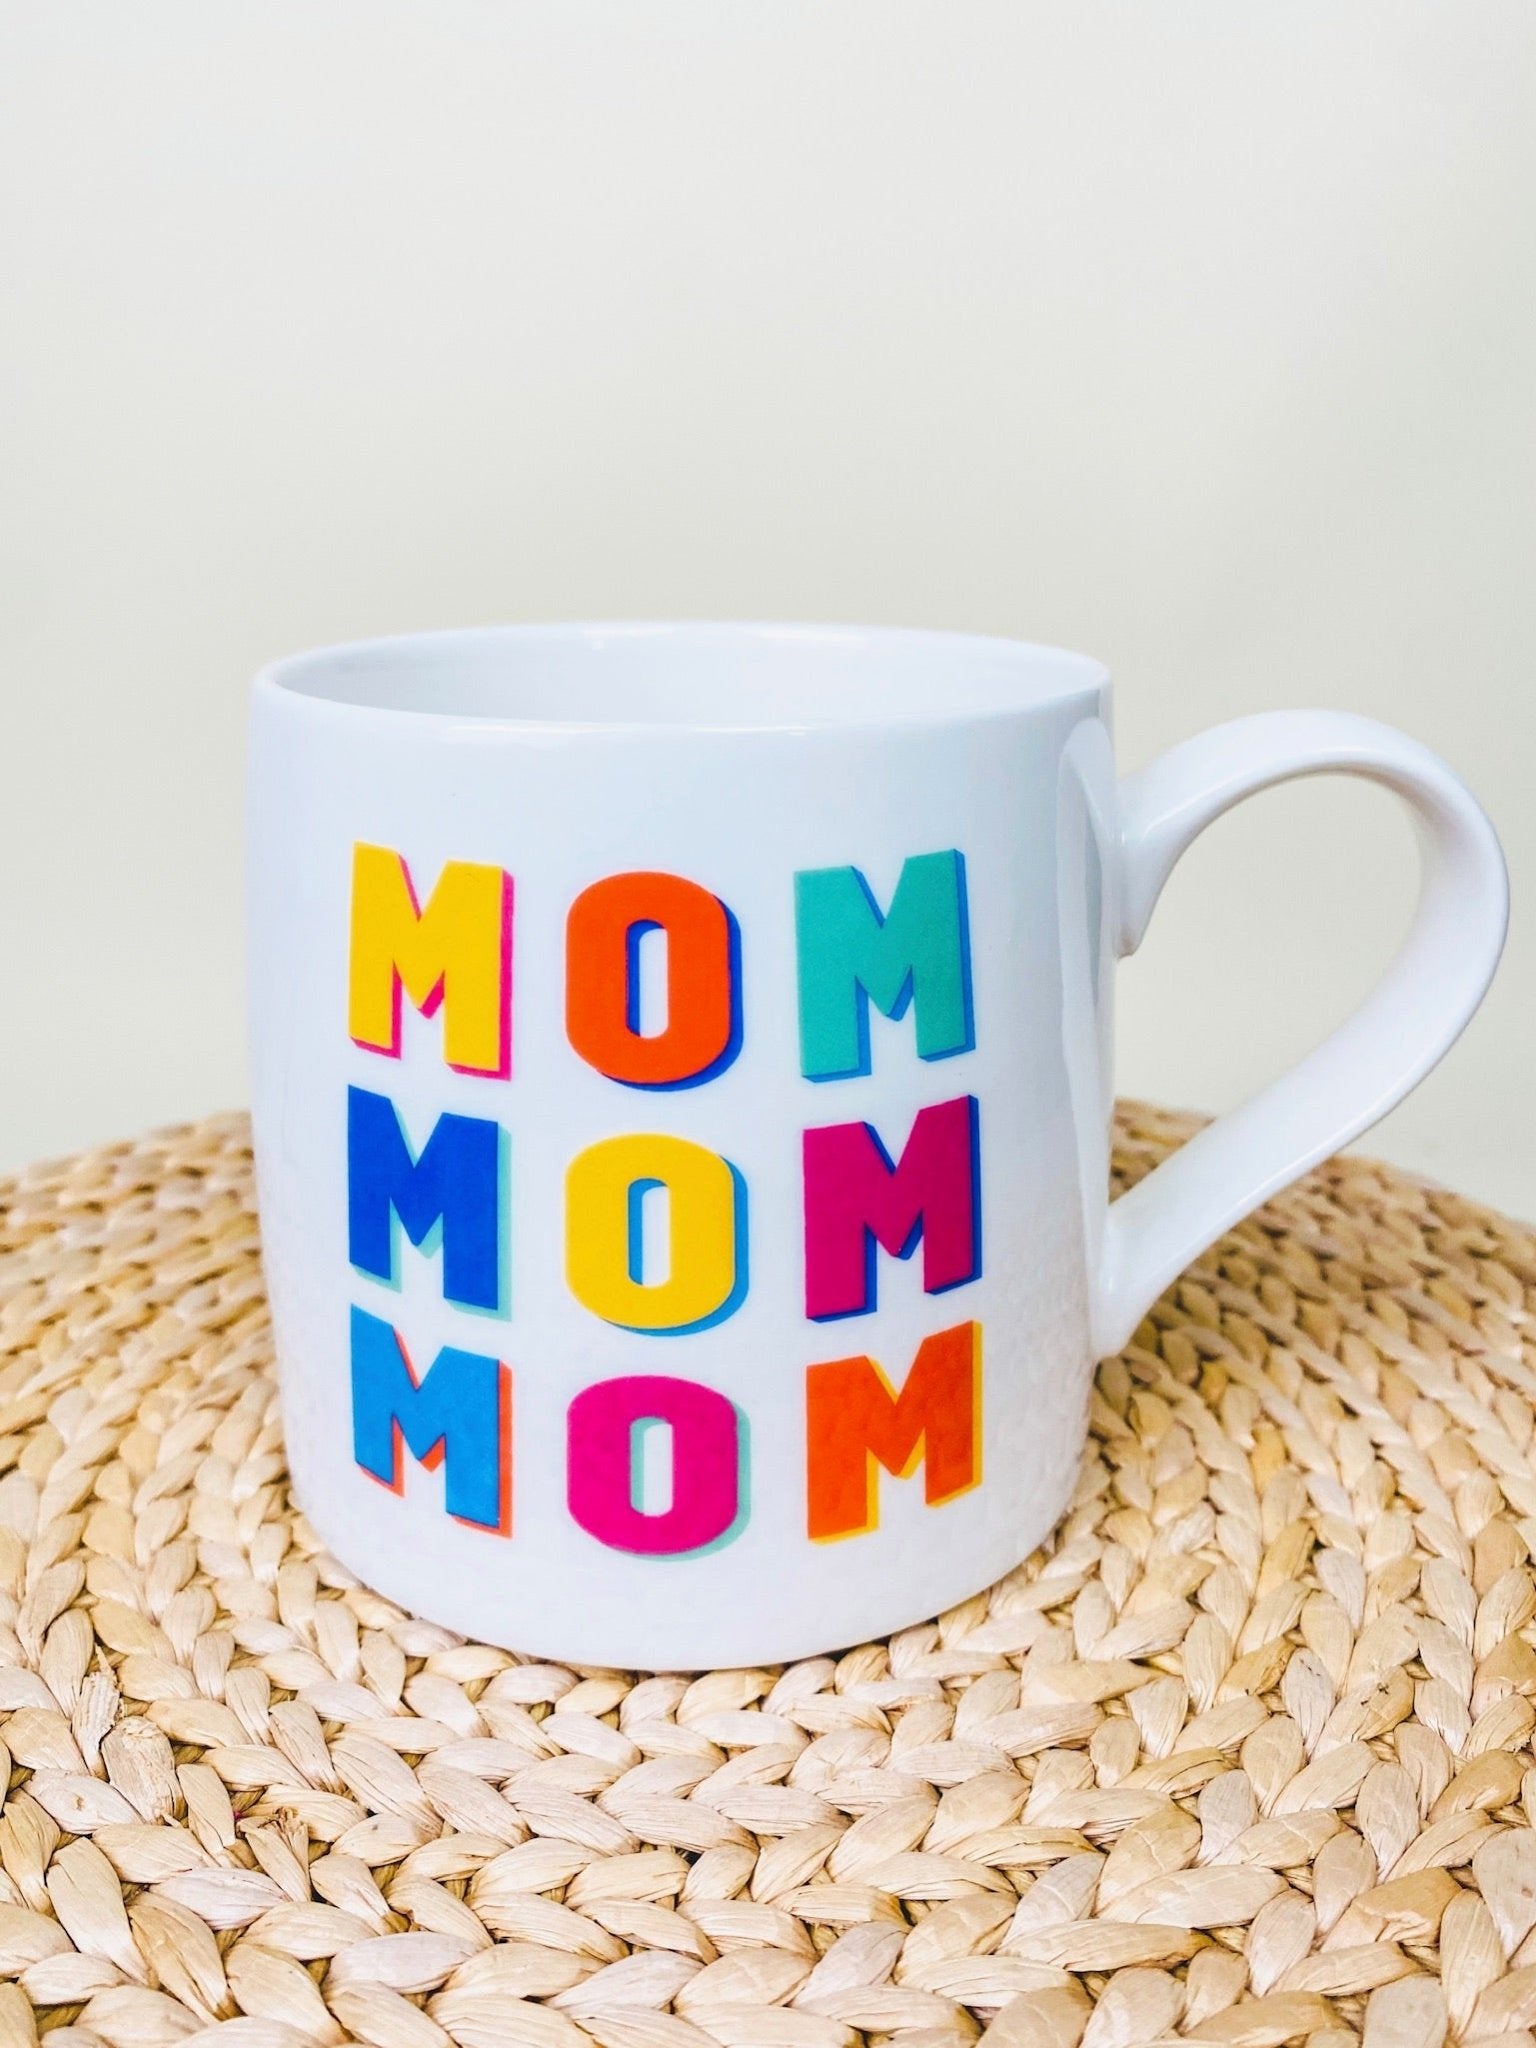 Mom jumbo coffee mug 20oz - Stylish Mugs - Trendy Gifts for Mom at Lush Fashion Lounge in Oklahoma